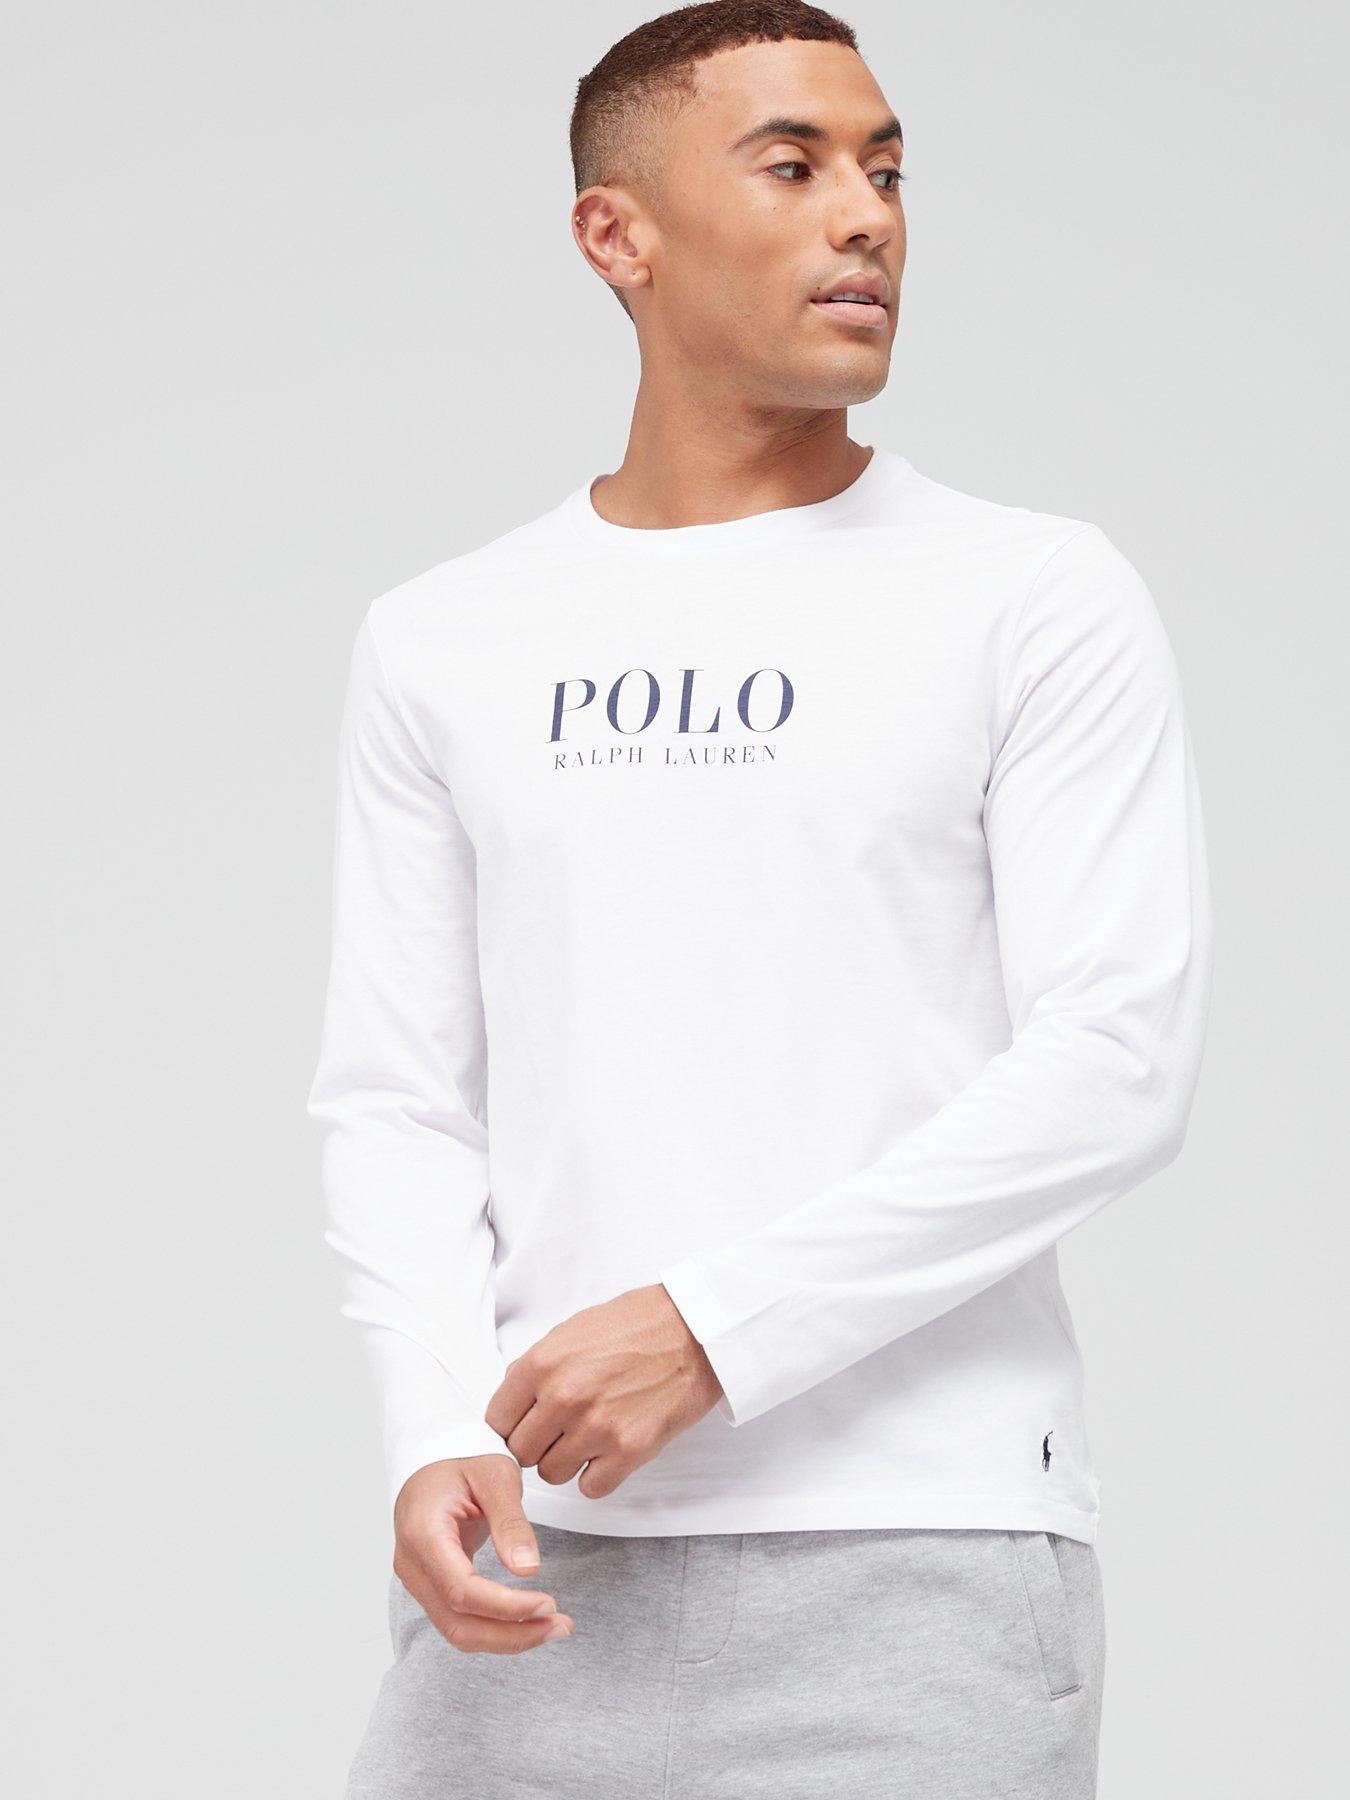 Polo ralph lauren | T-shirts & polos | Men 